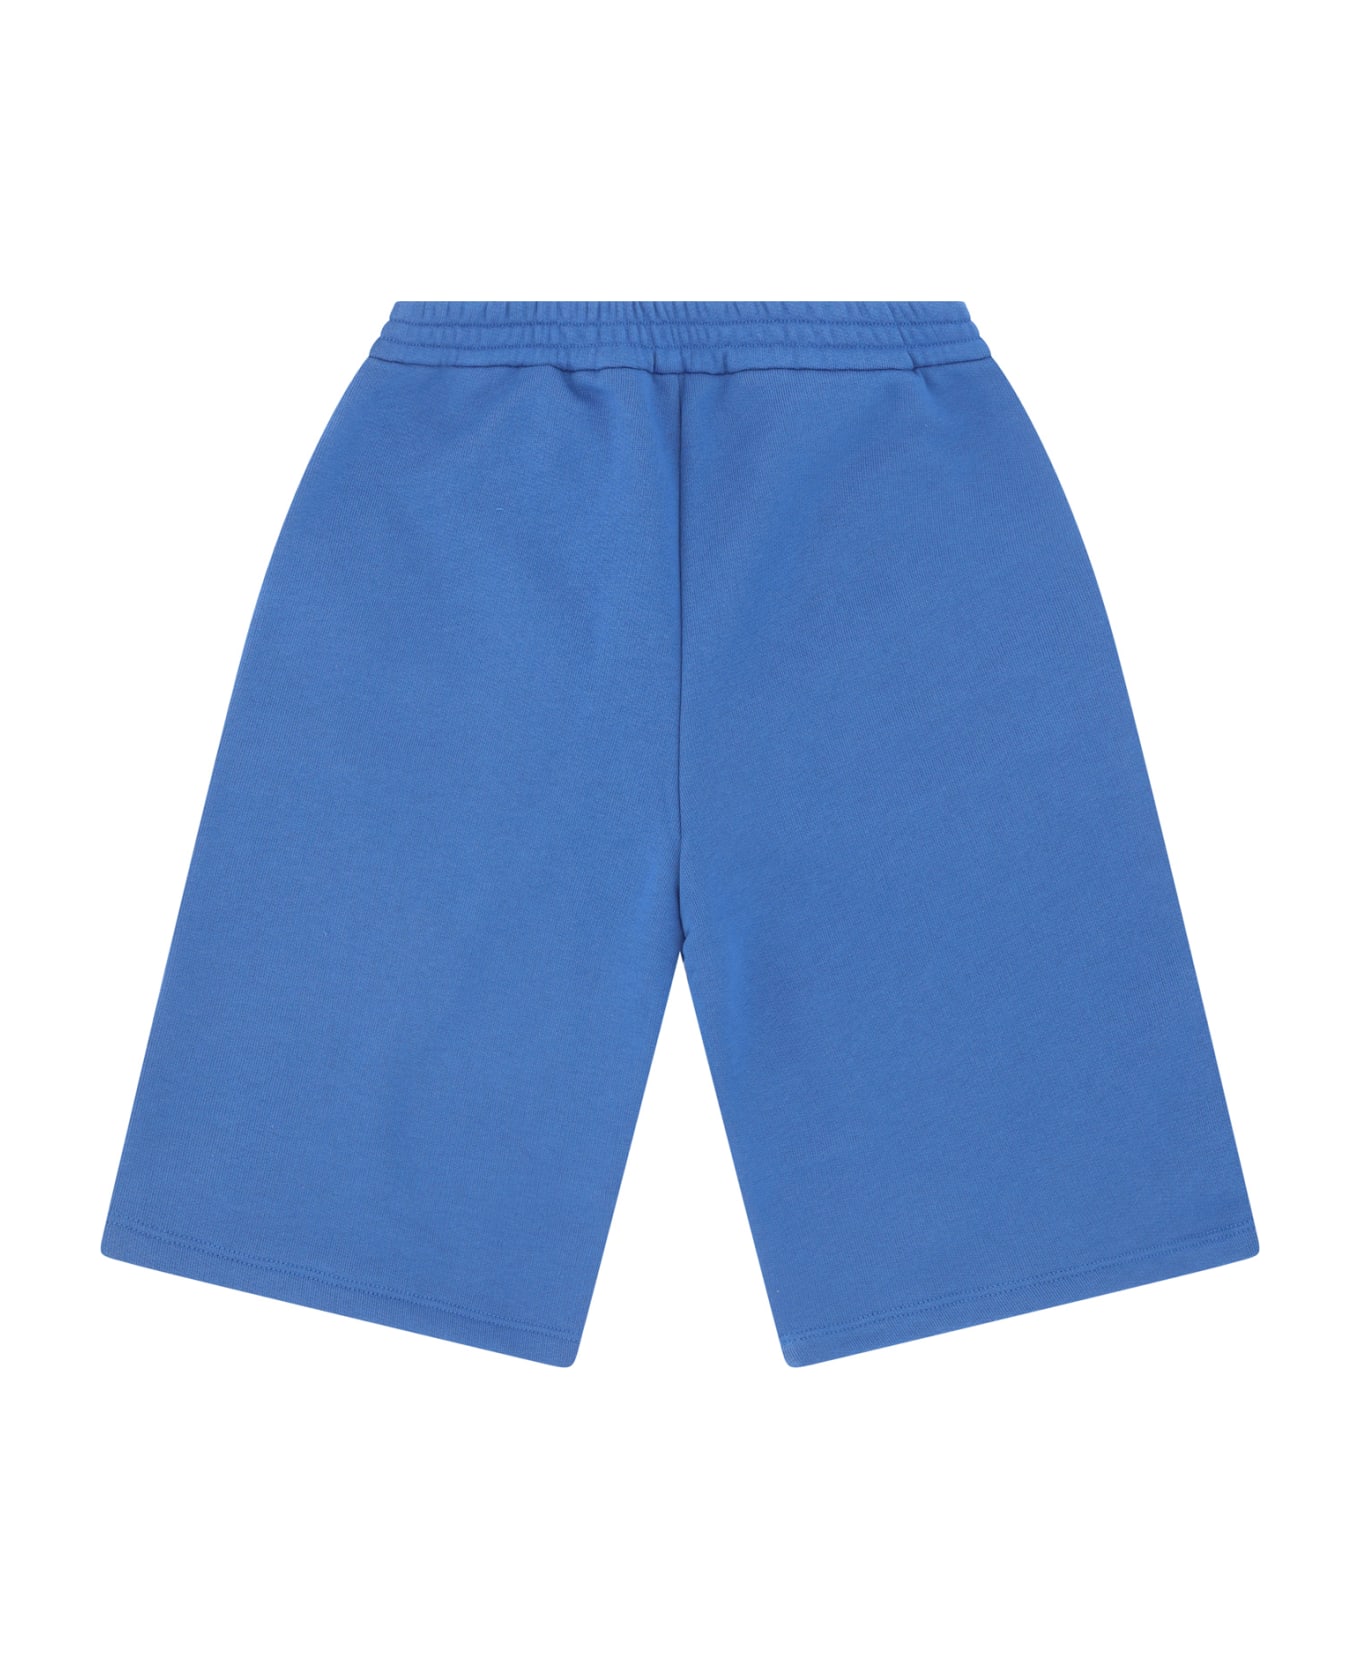 Gucci Shorts For Boy - LIGHT BLUE